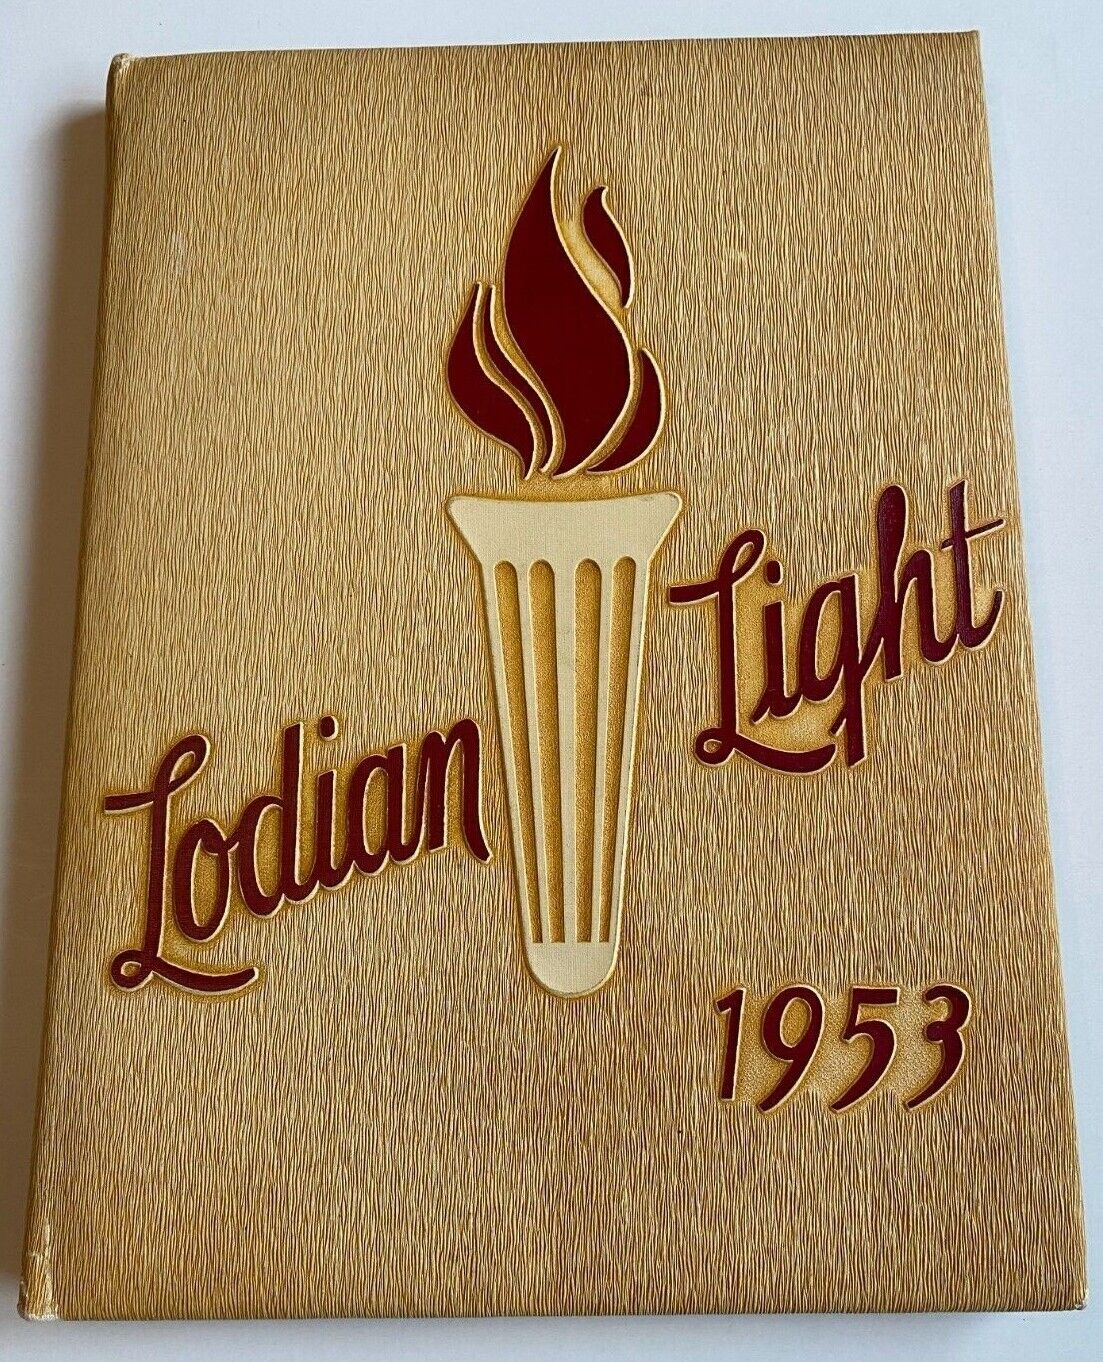 1953 Lodi Academy School Yearbook, Lodi, California - LODIAN LIGHT - EXCELLENT